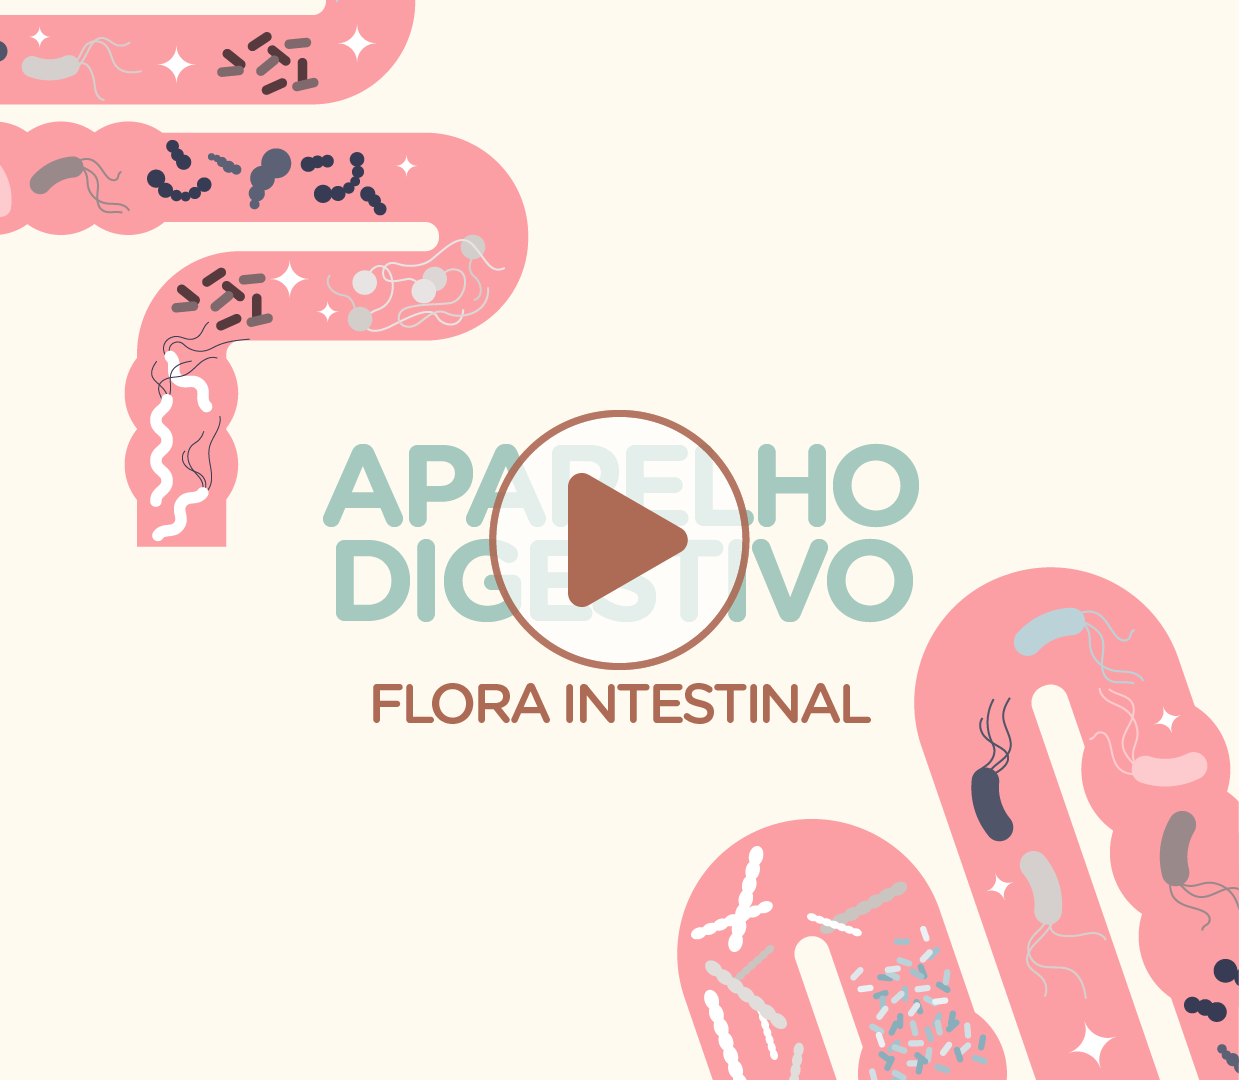 Flora Intestinal - Aparelho Digestivo